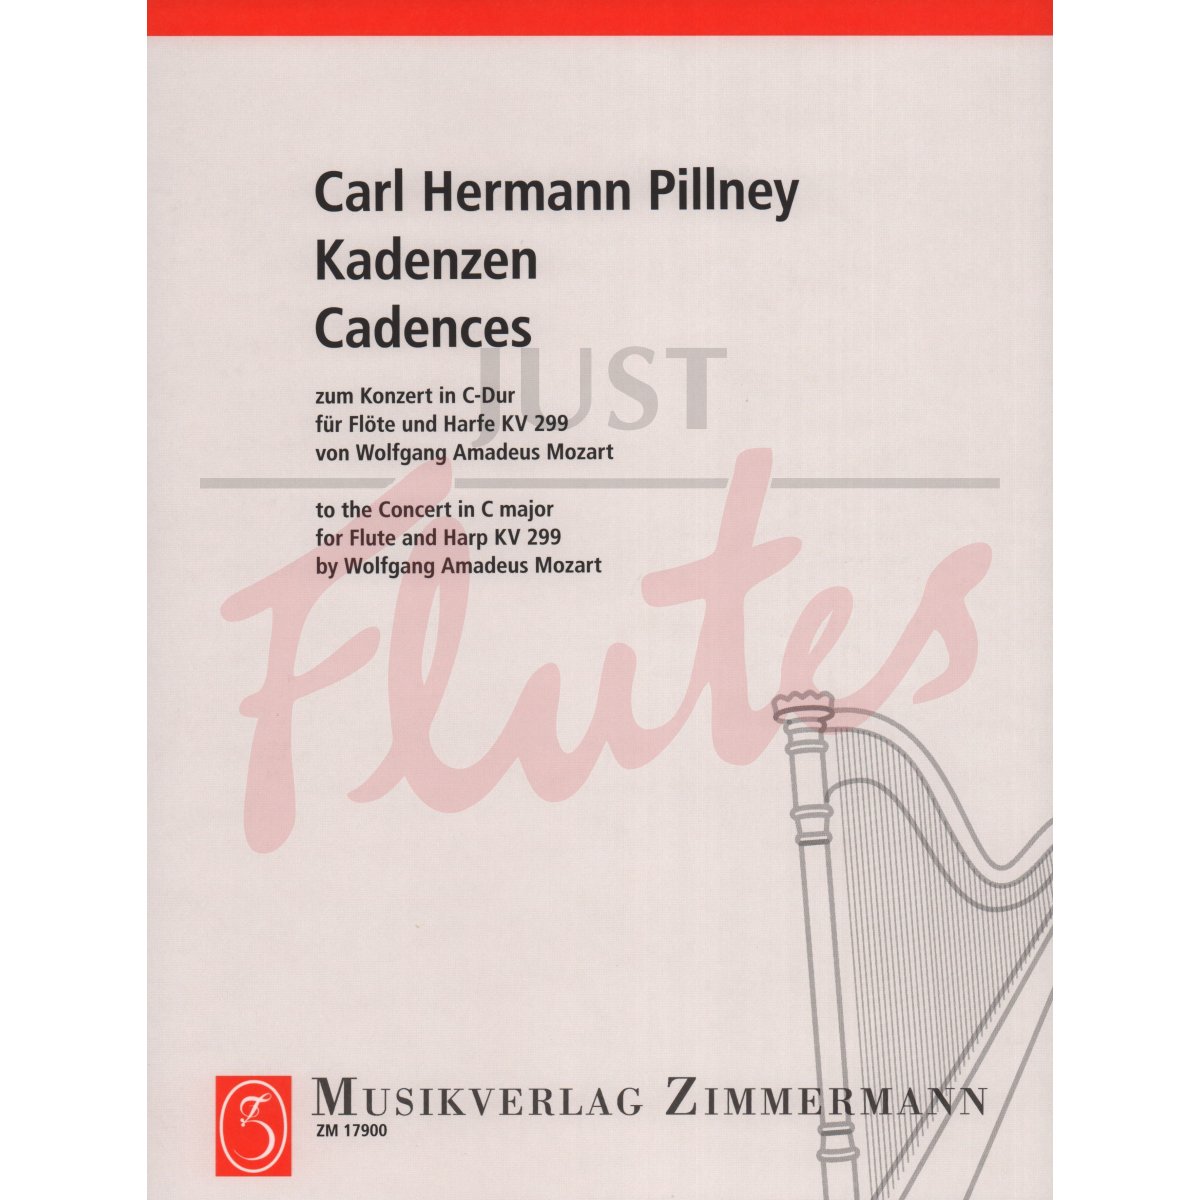 Cadenzas for Flute and Harp Concerto in C major